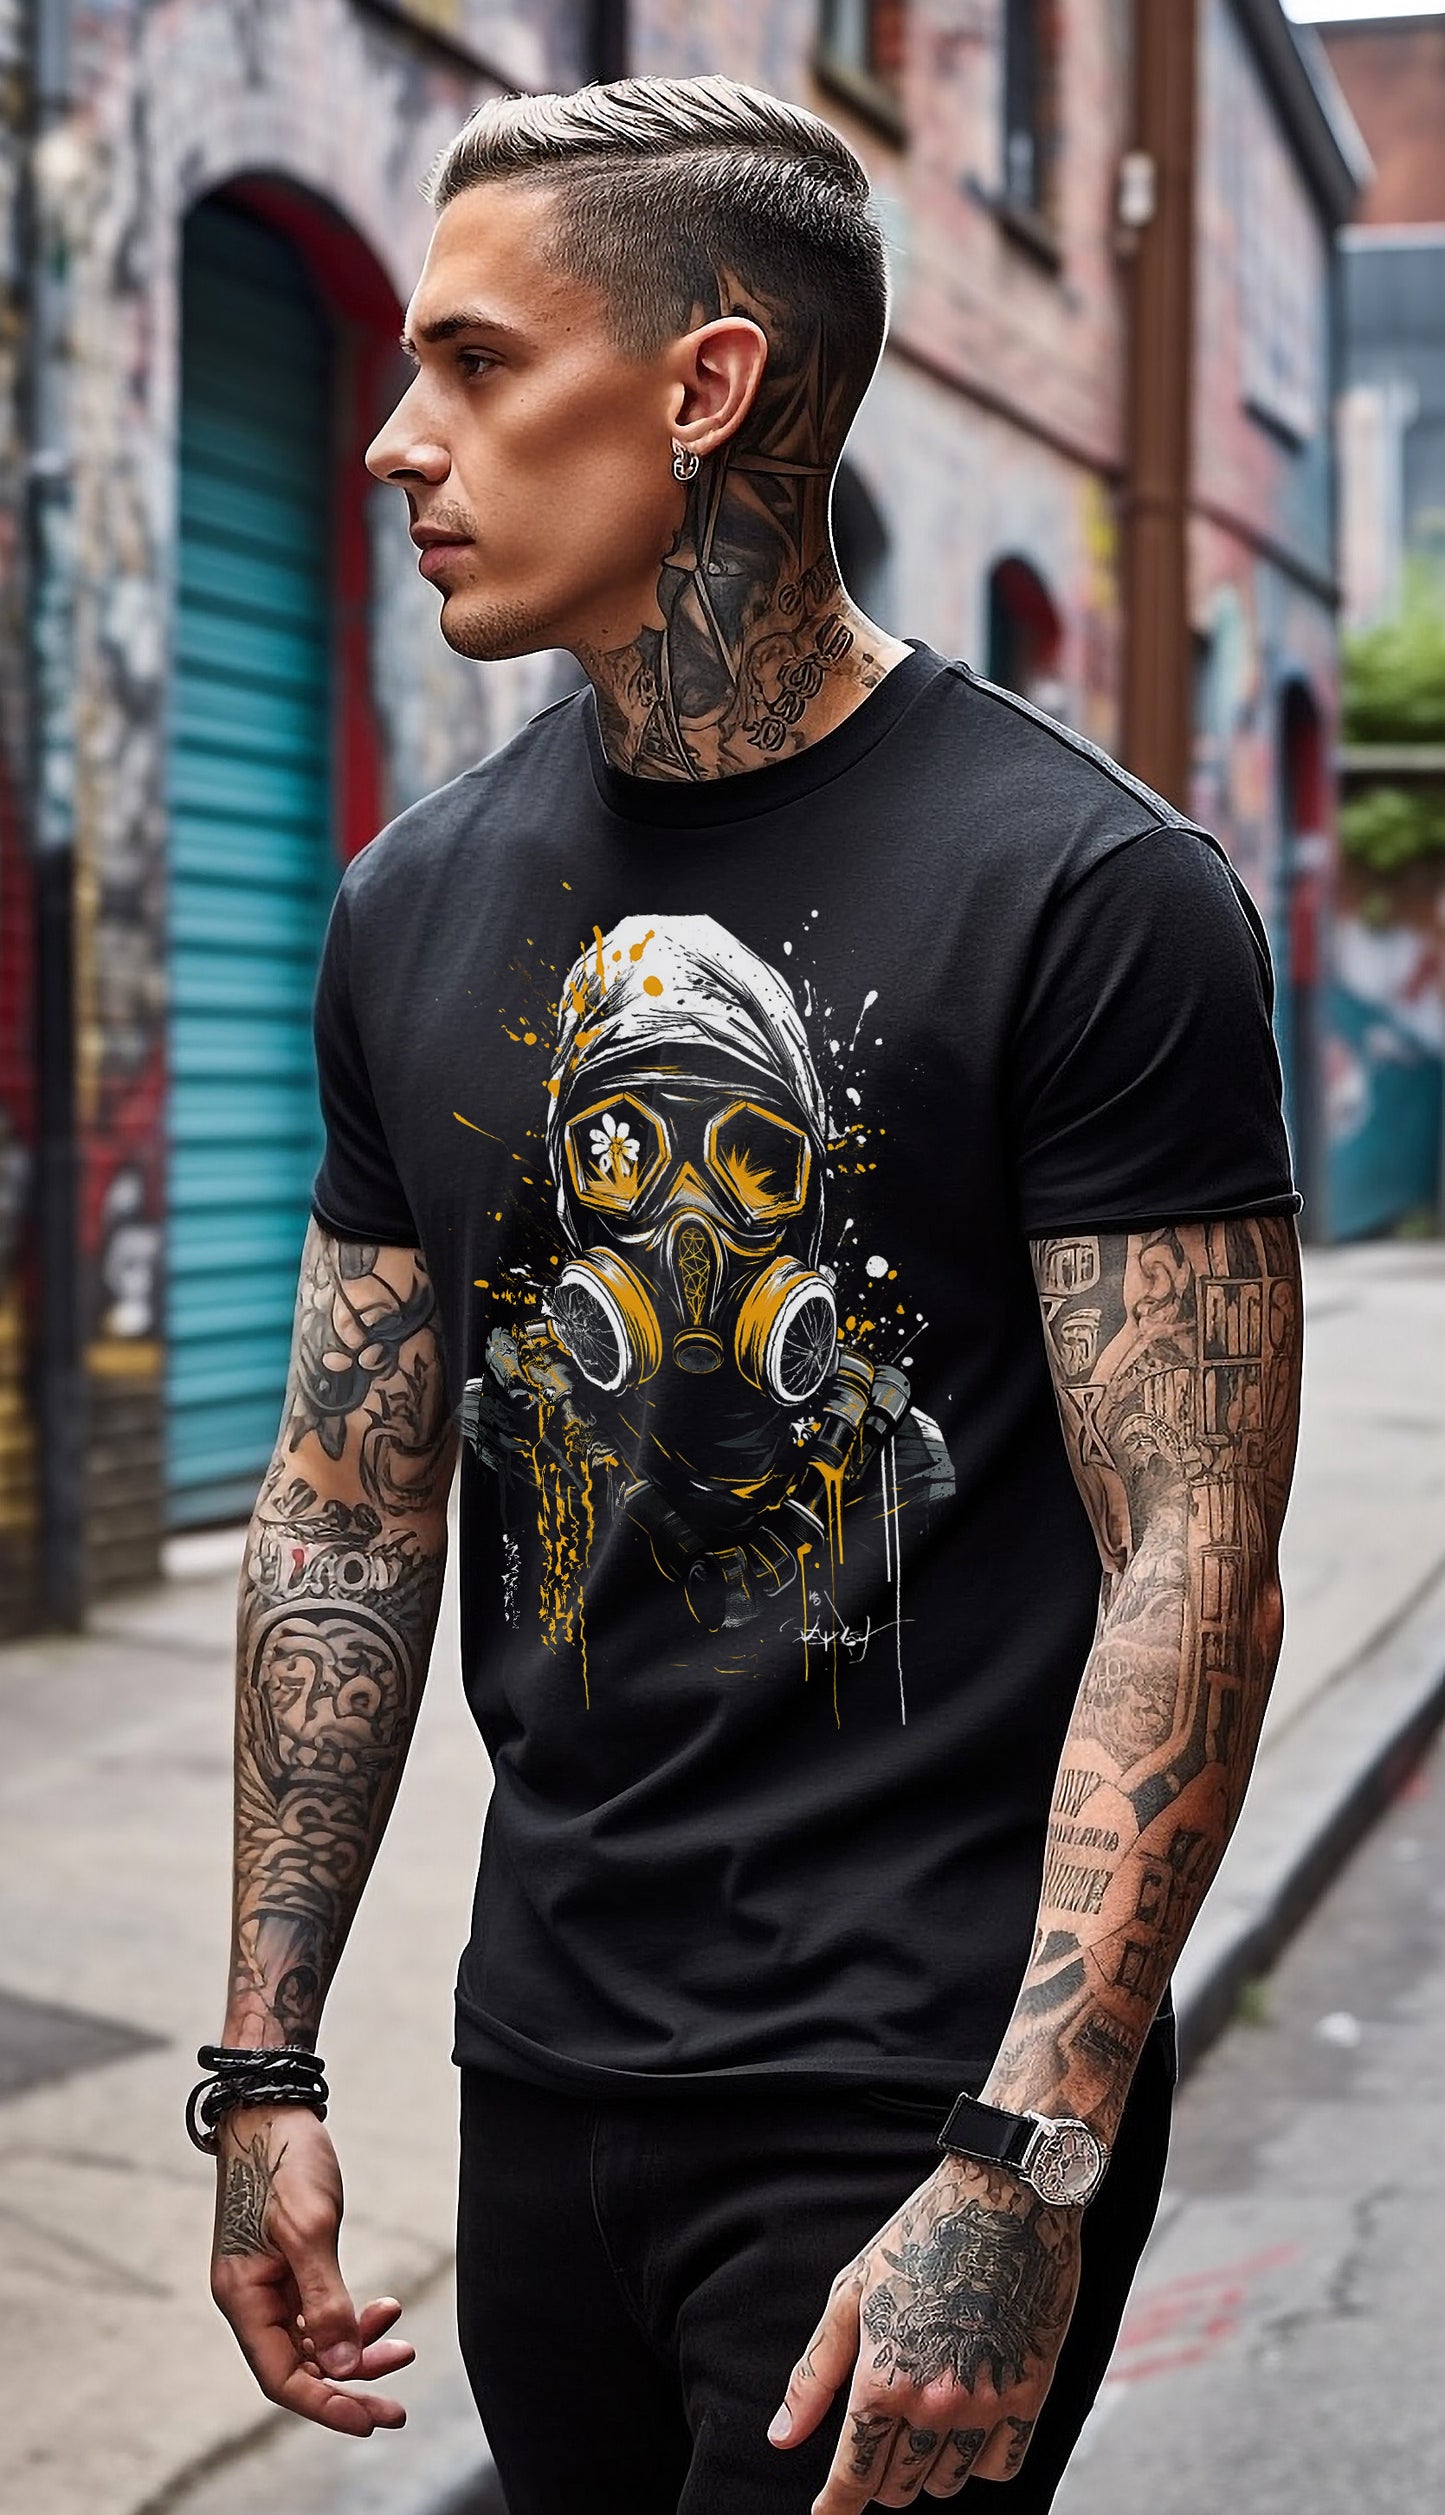 Sprayer - Men’s Premium T-Shirt